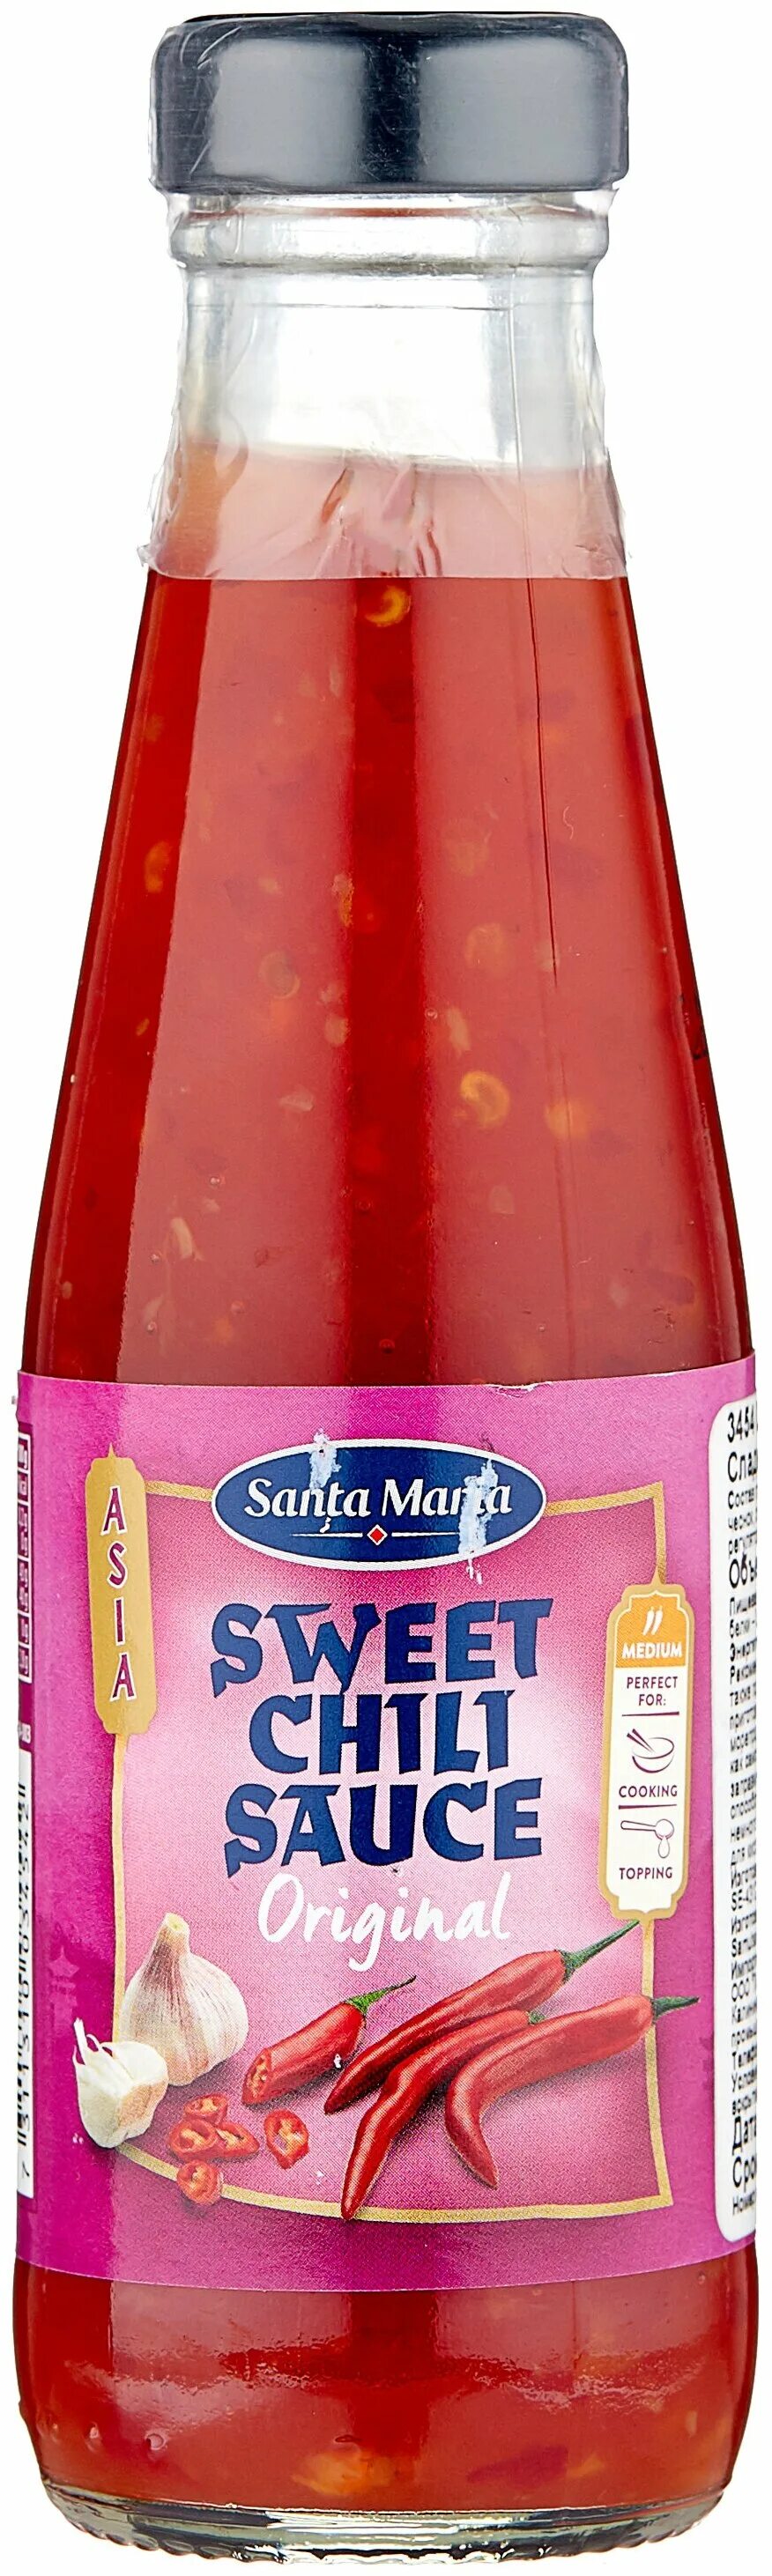 Sweet chili. Santa Maria сладкий соус Чили. Соус Santa Maria Sweet Chili, 1.95 л. Соус Santa Maria Sweet Chili Original, 500 мл.